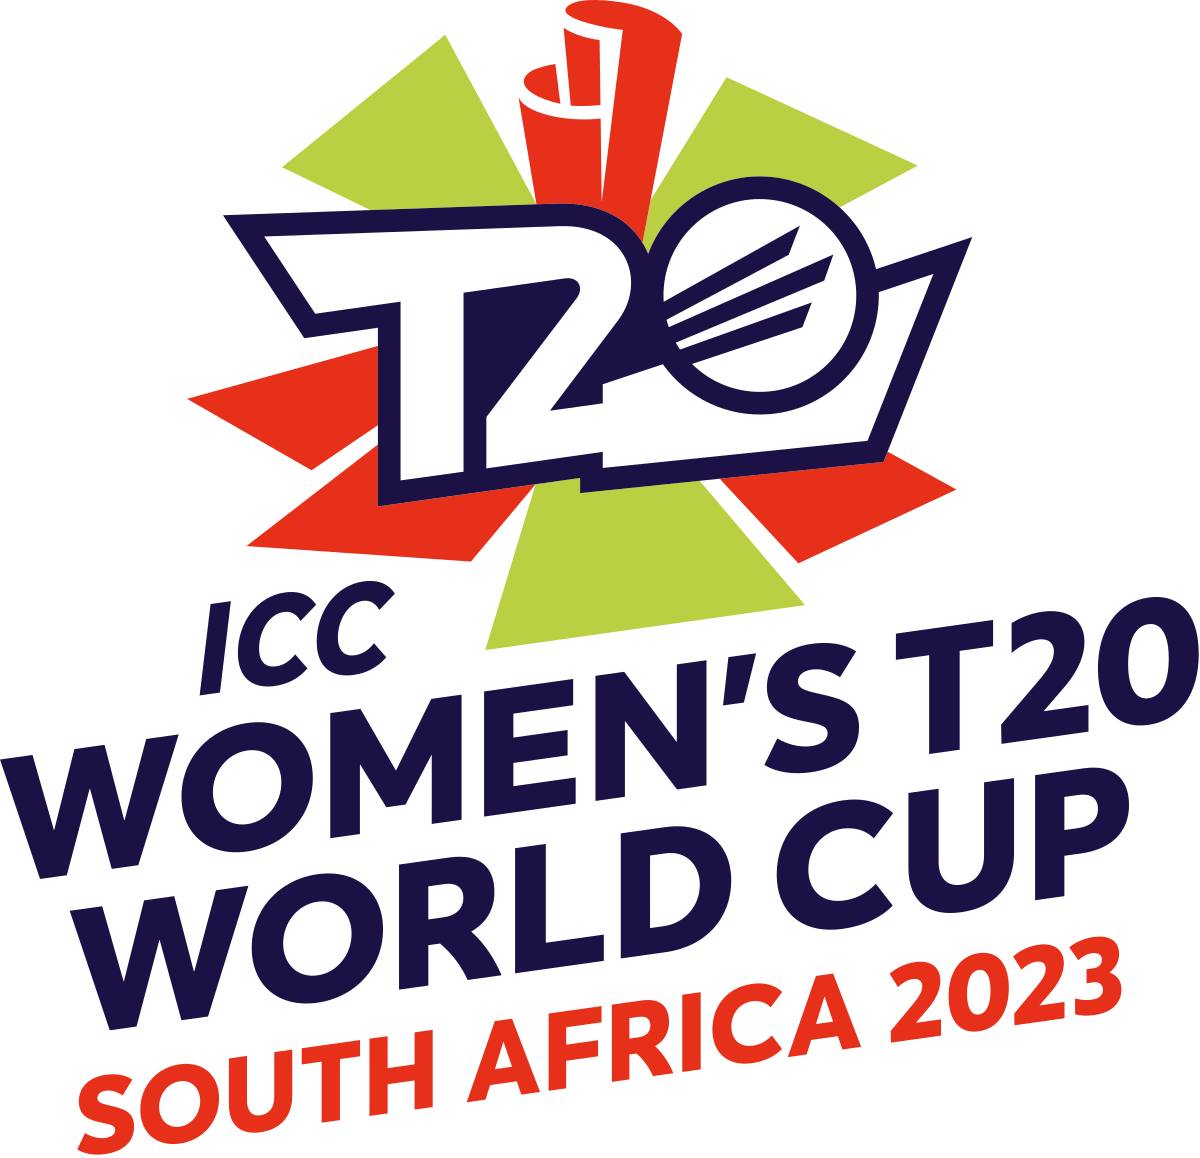 2023 FIFA Women's World Cup - Wikipedia